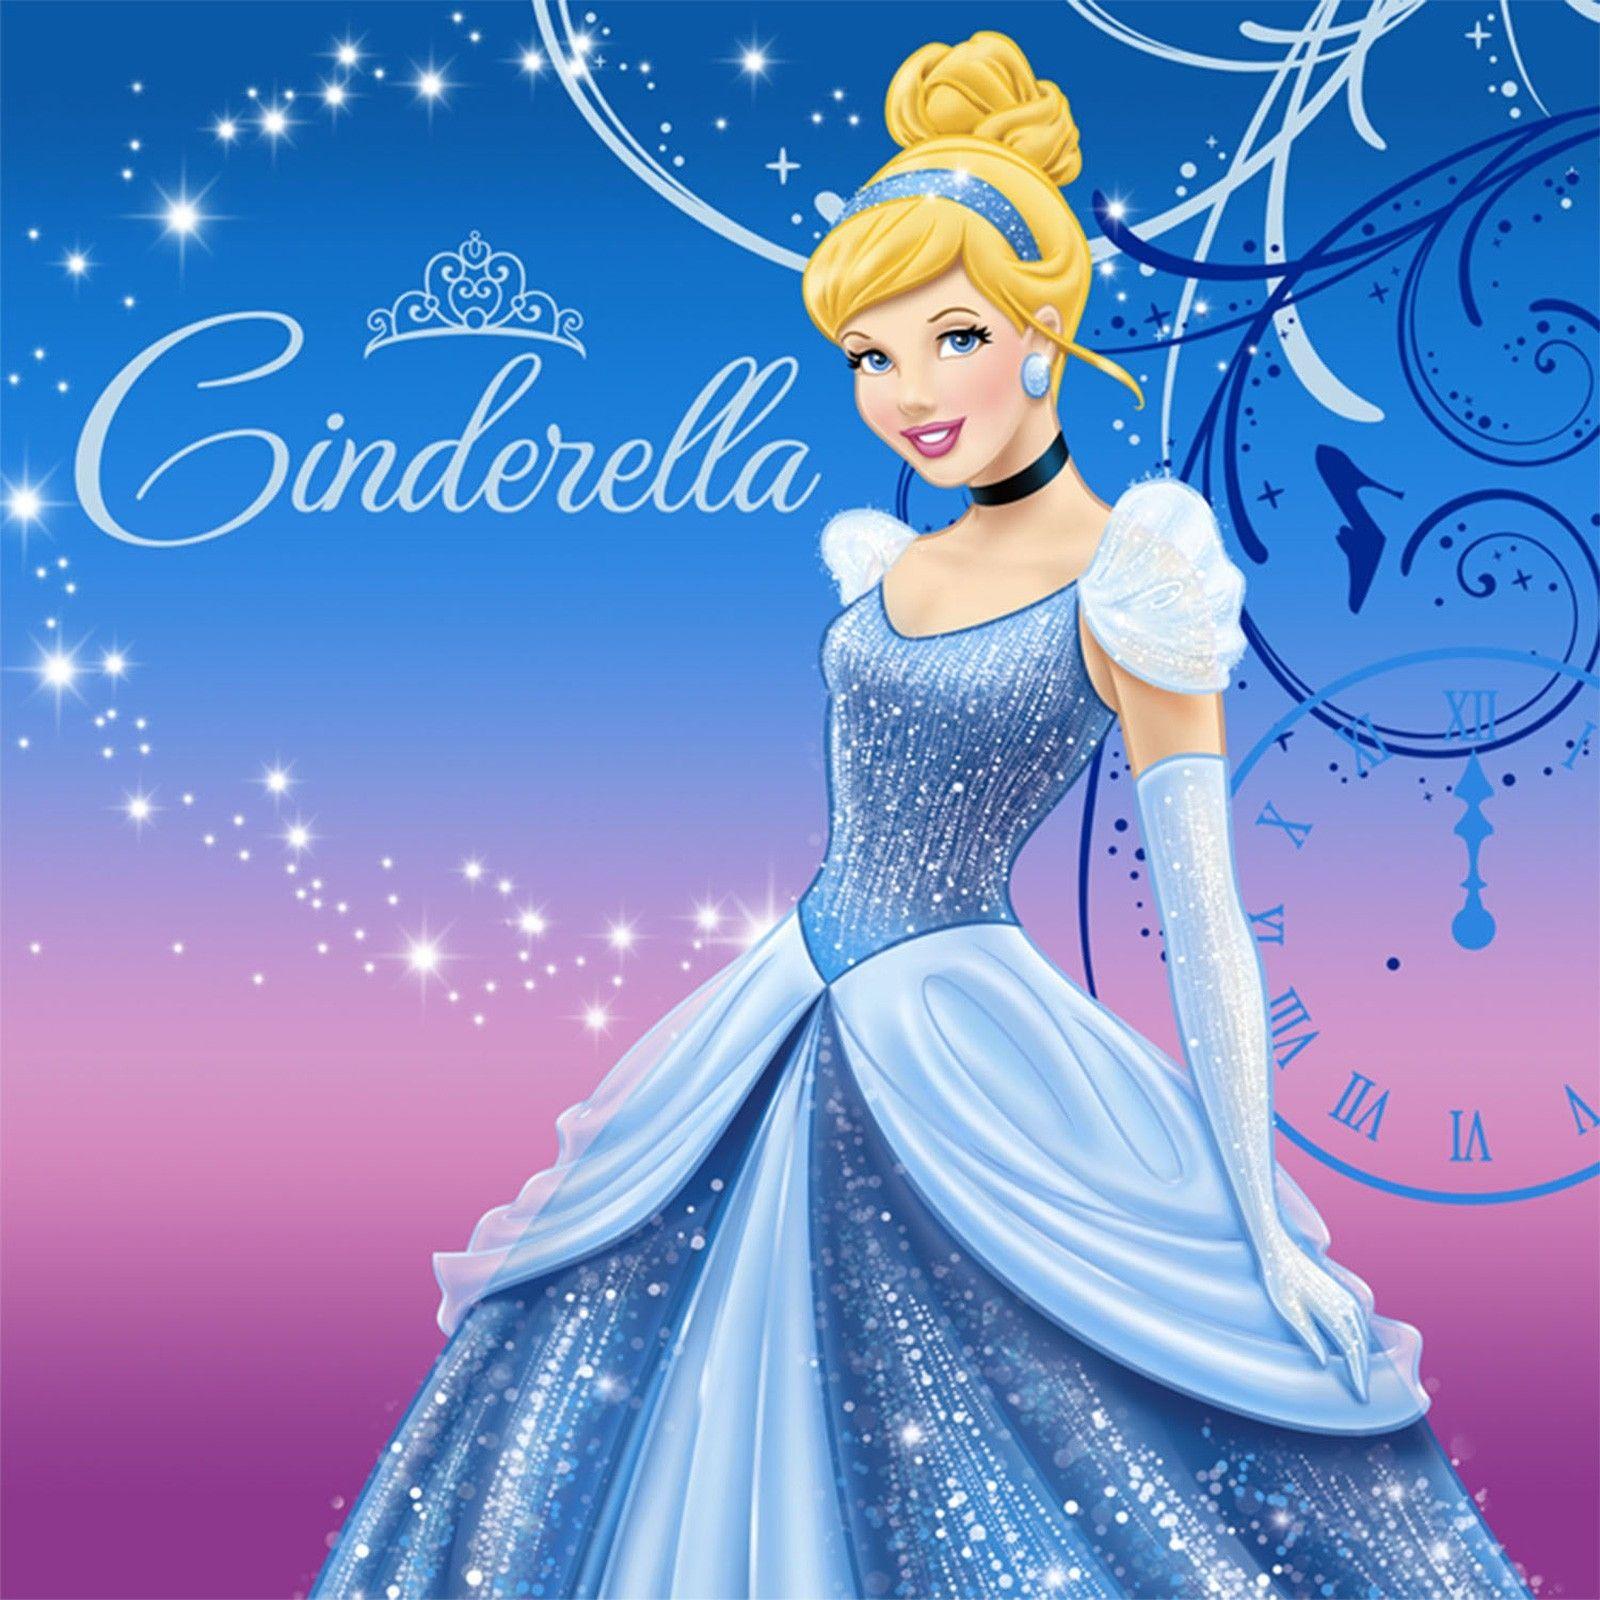 Disney Cinderella Princess Free HD Wallpaper